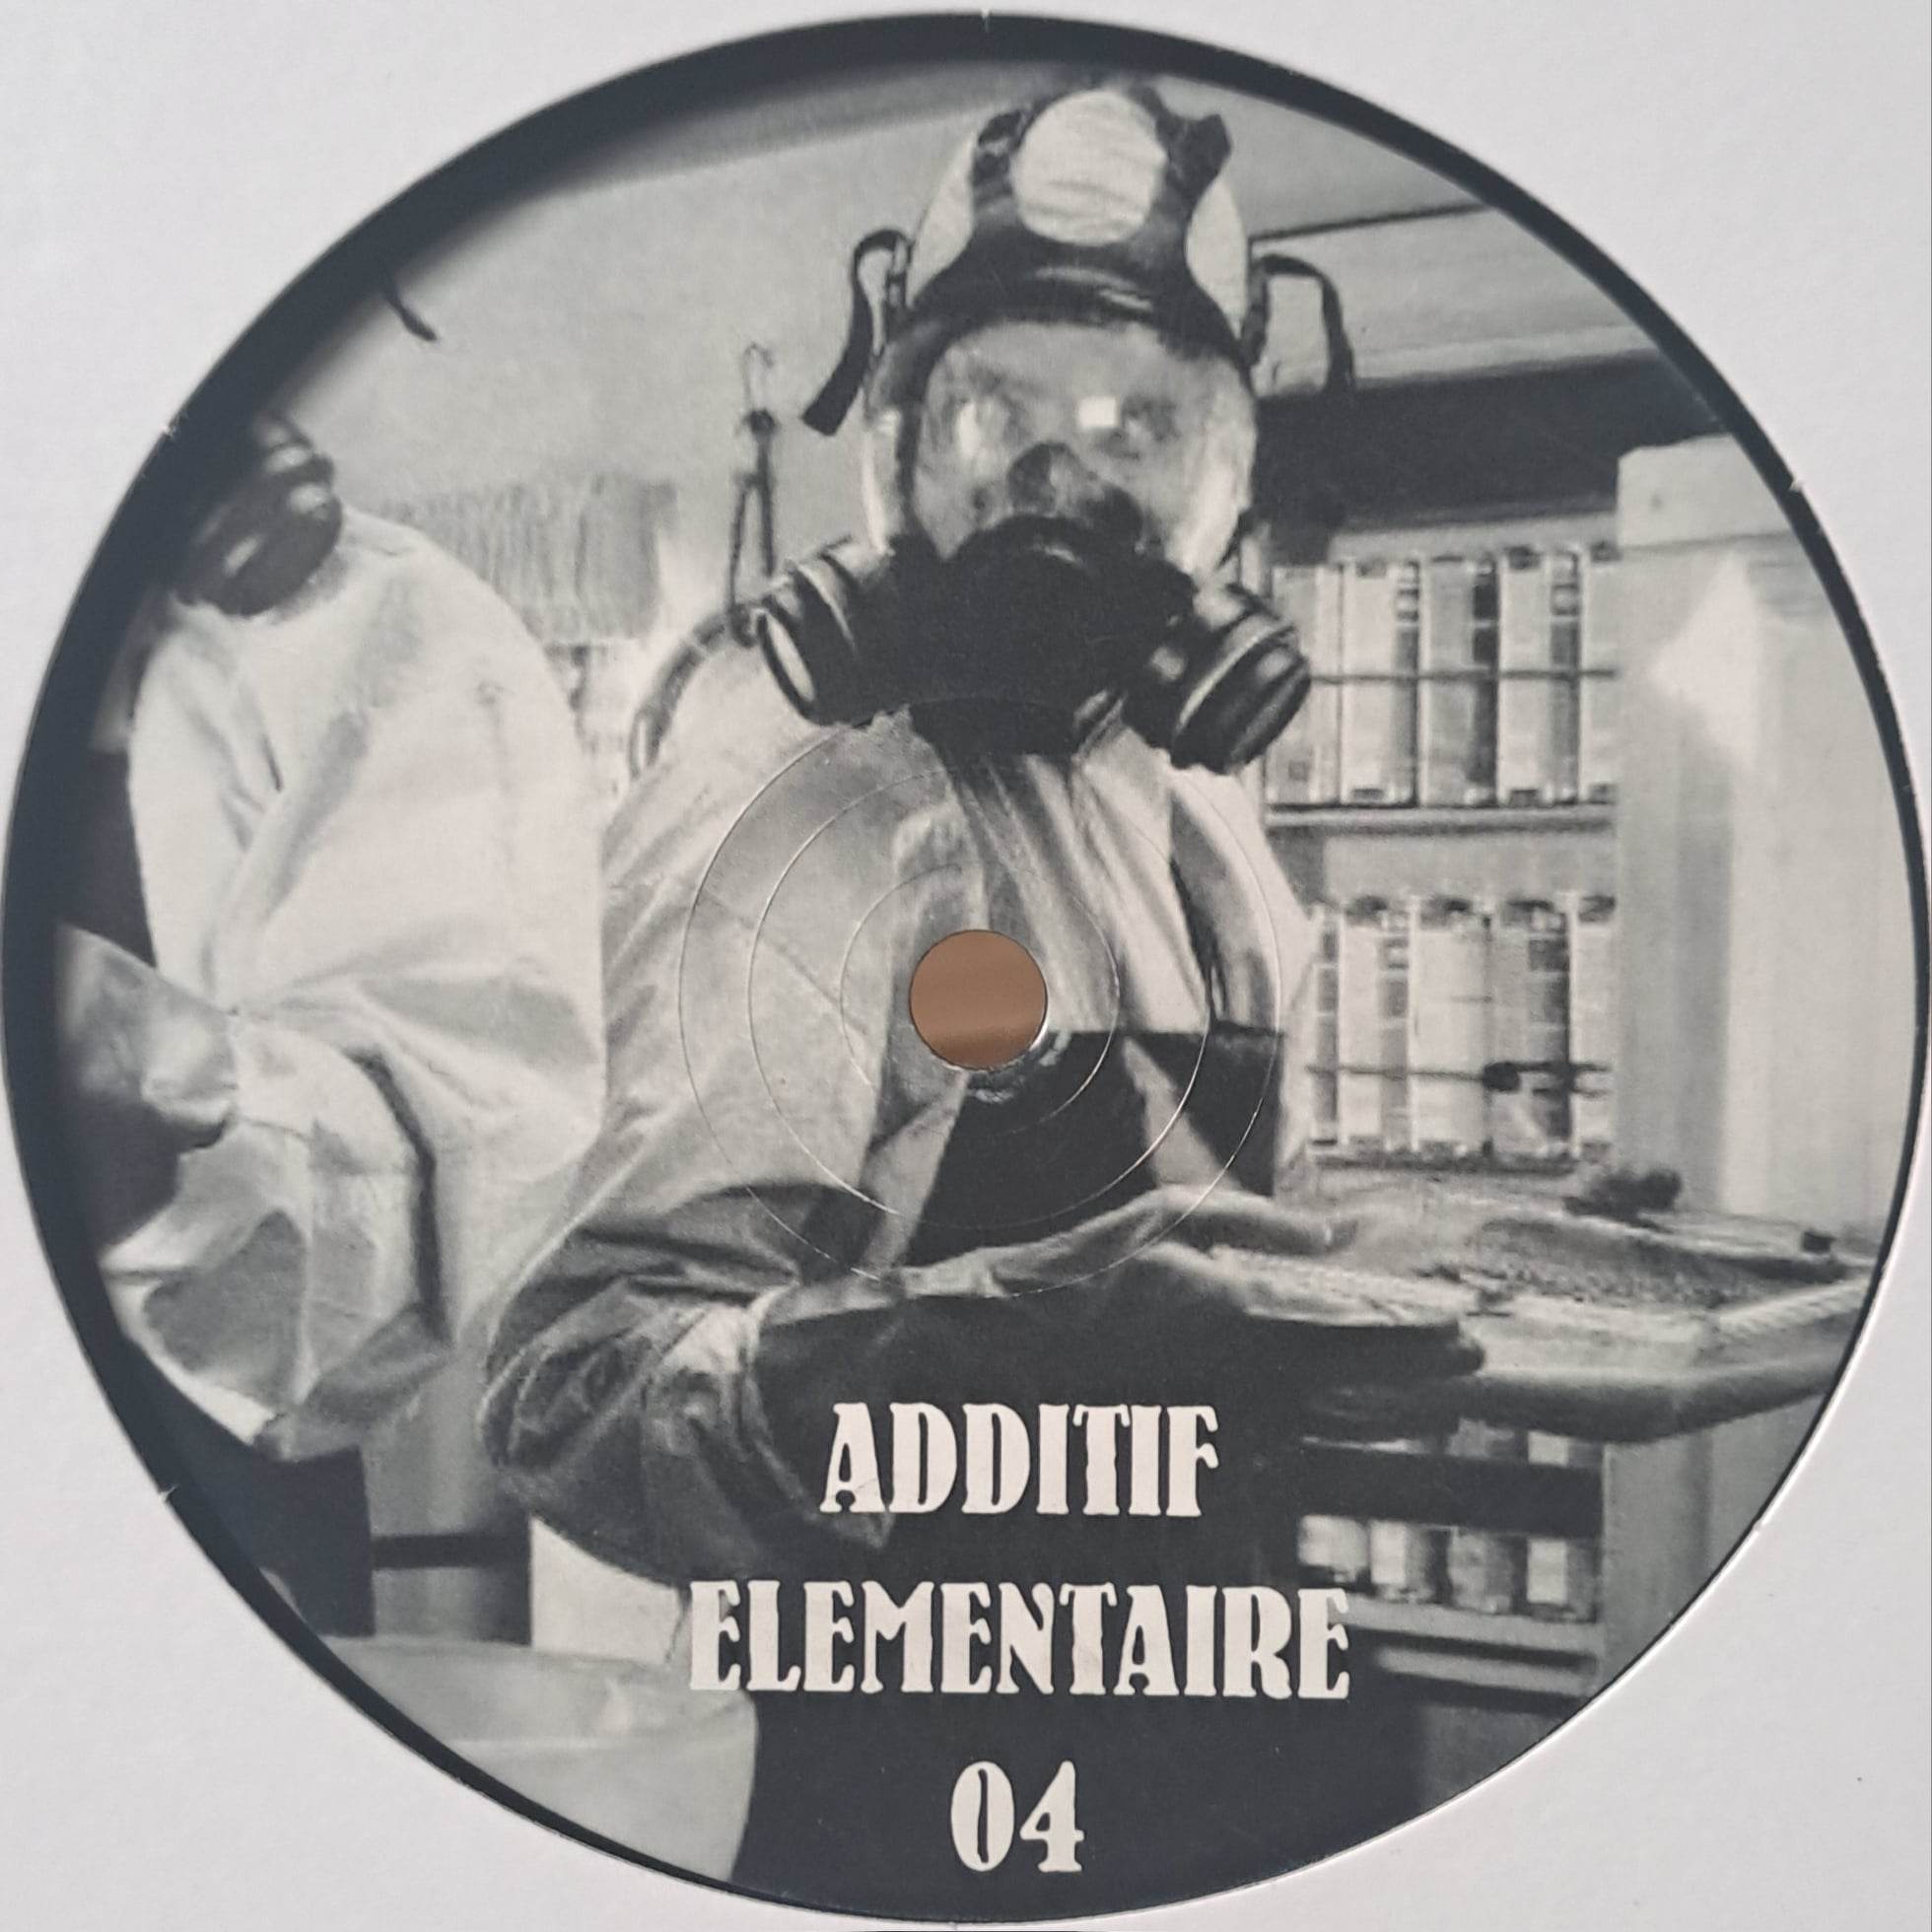 Additif Elementaire 04 - vinyle freetekno